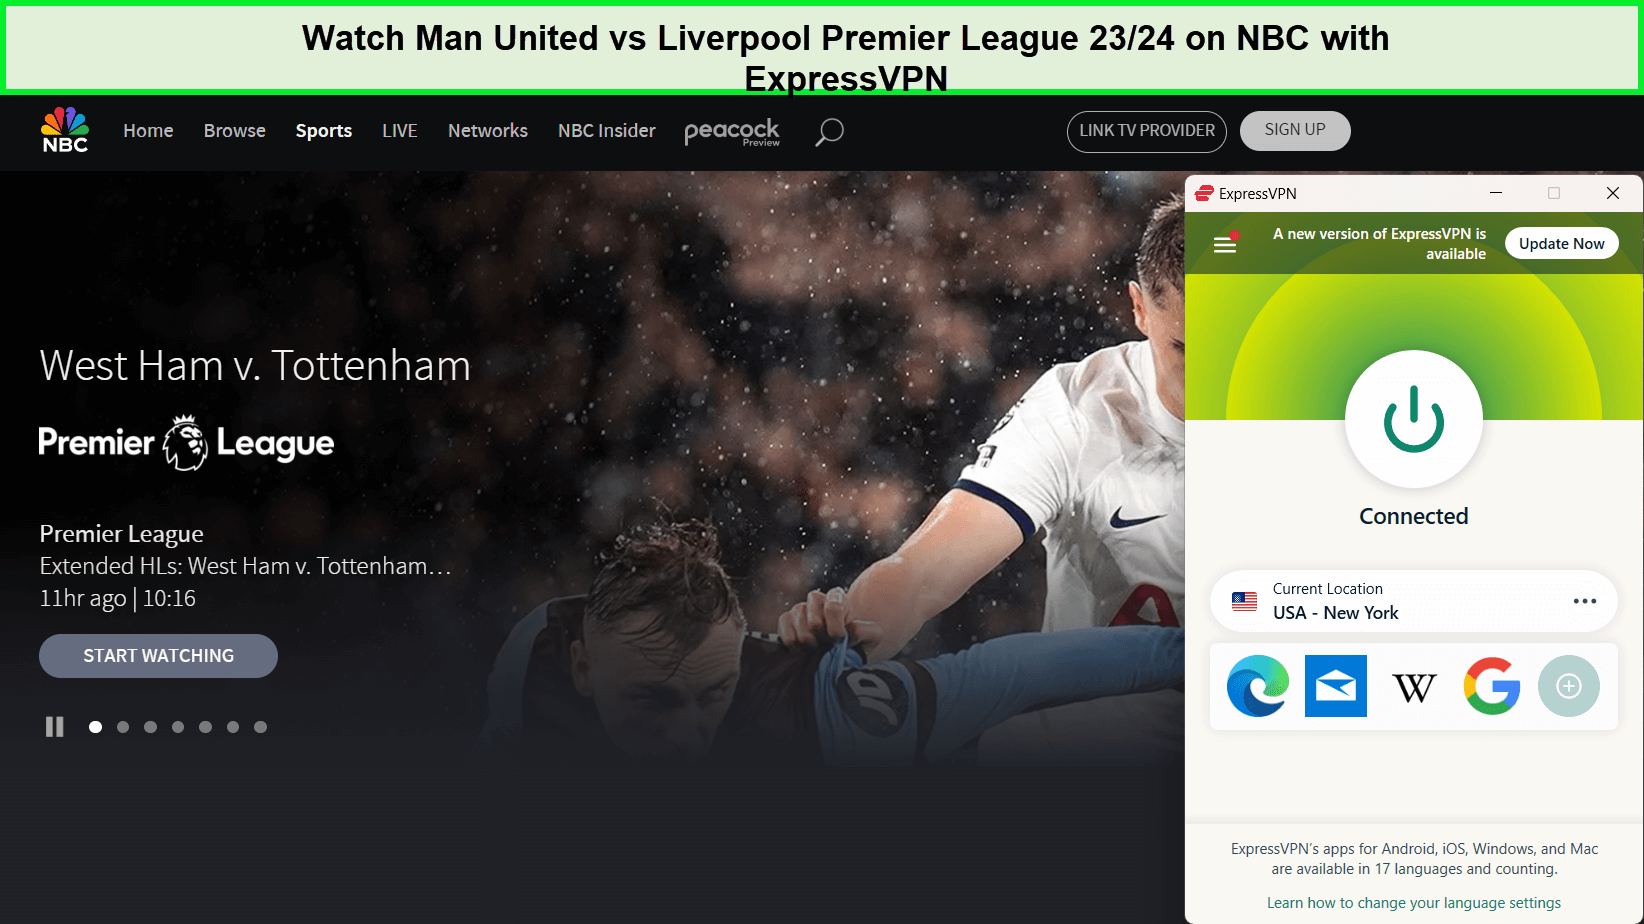 Watch-Man-United-vs-Liverpool-Premier-League-23-24-outside-USA-on-NBC